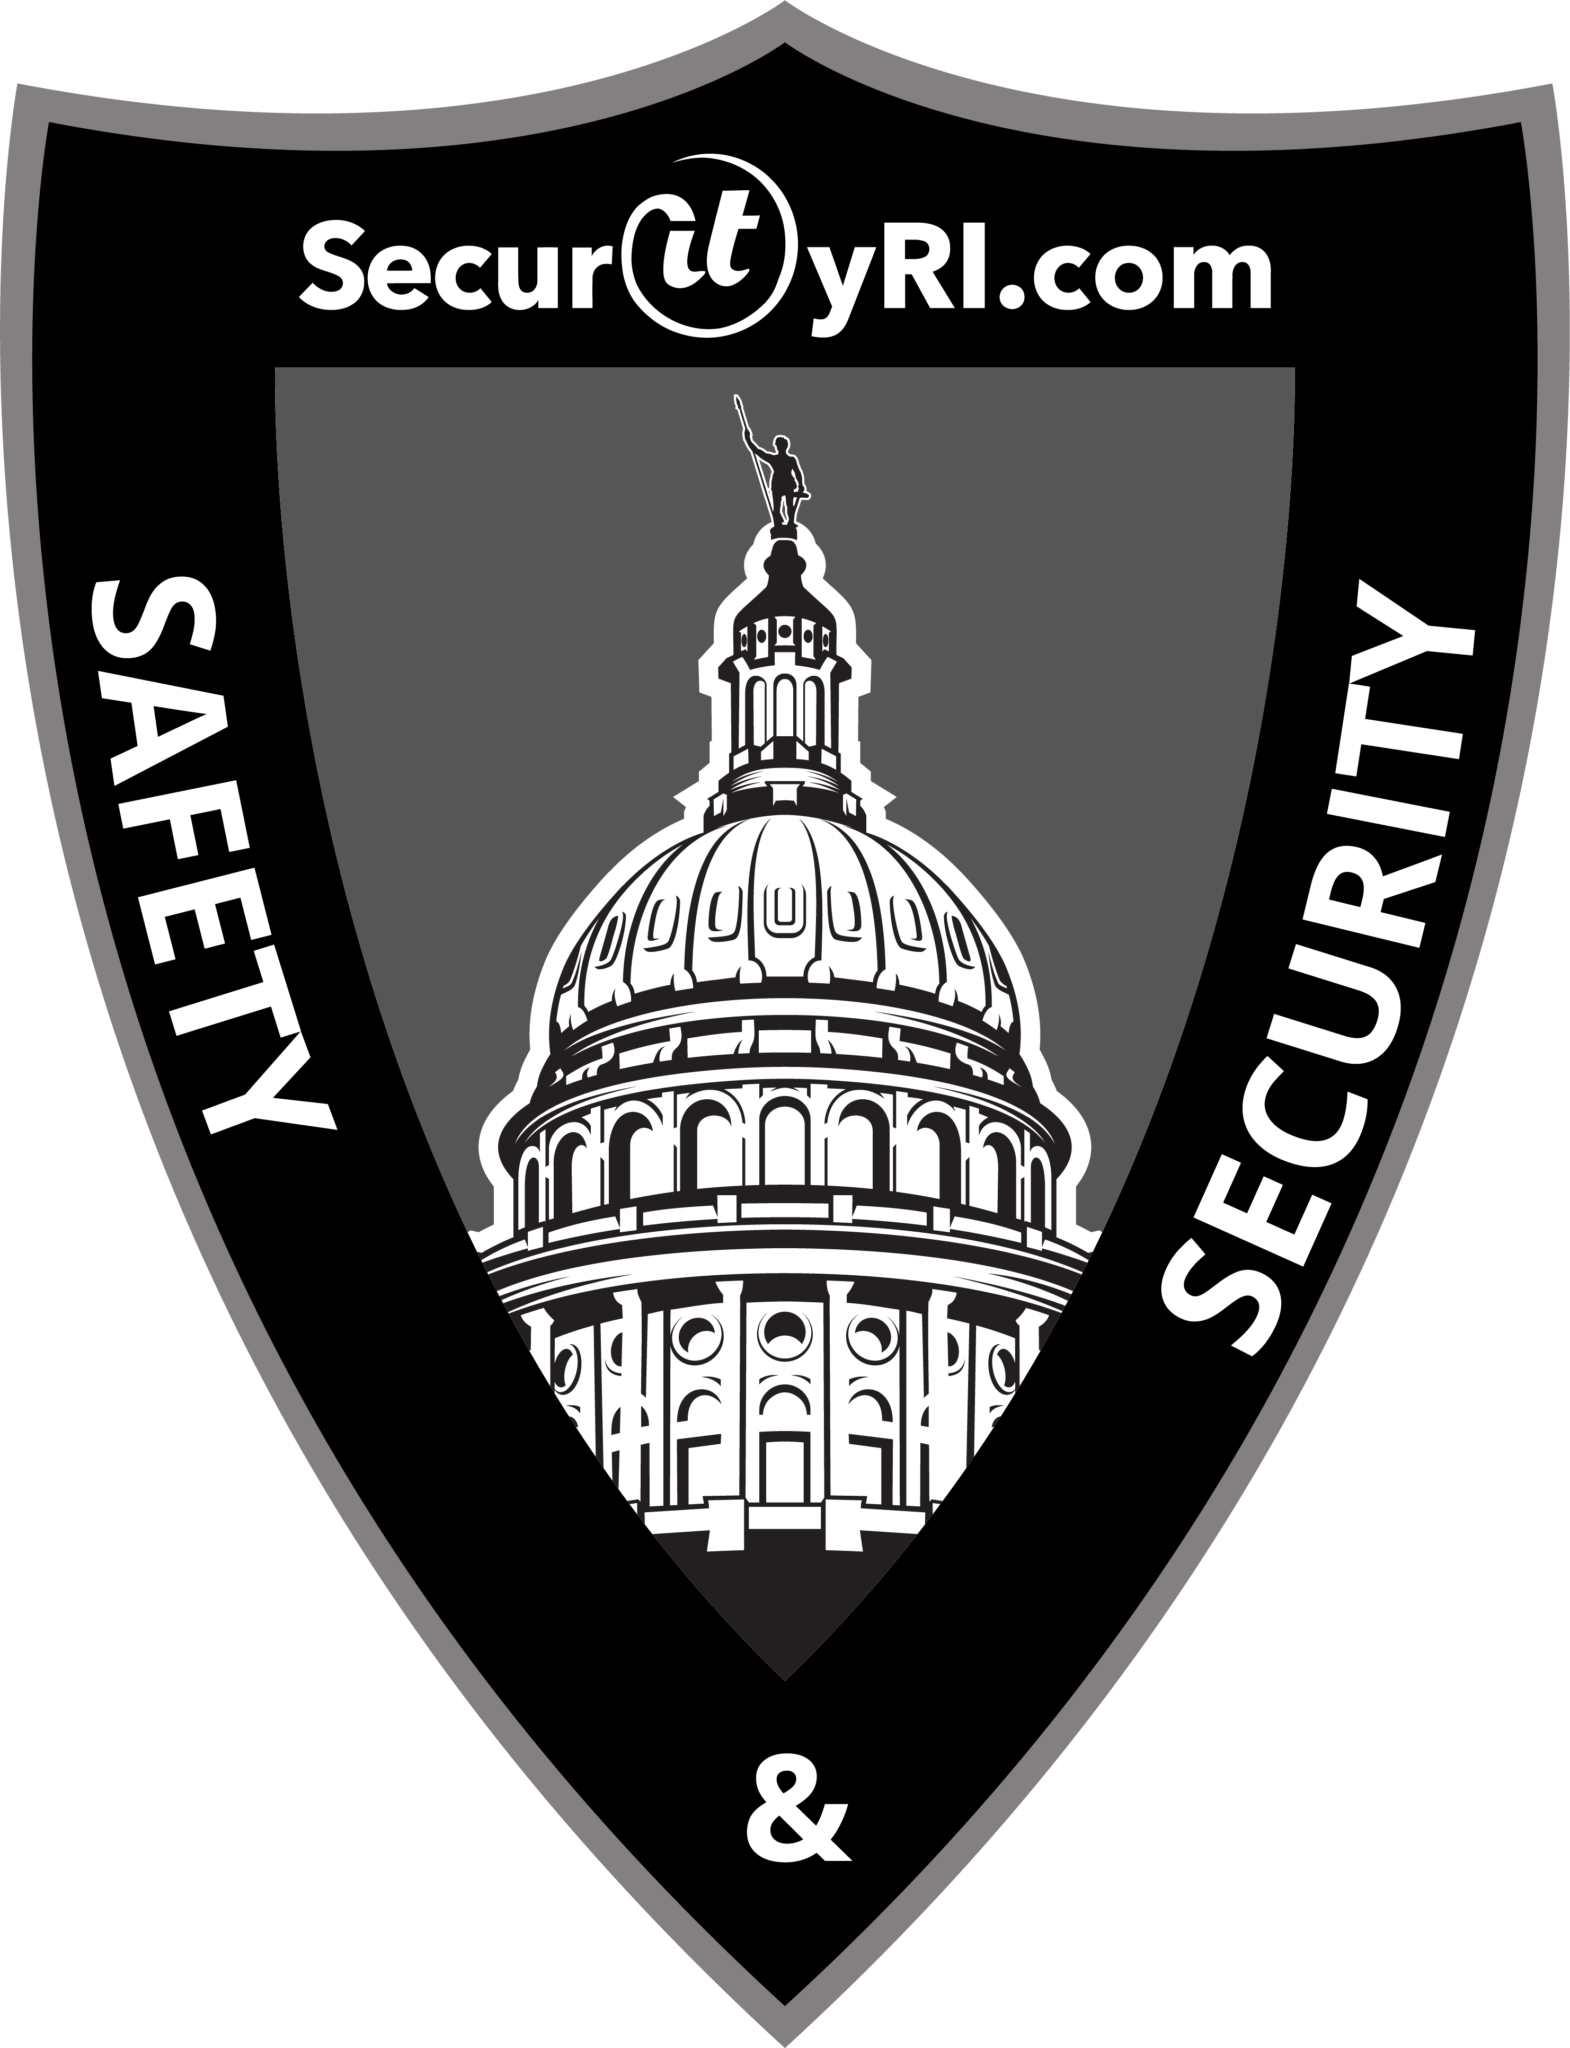 SecurityRI